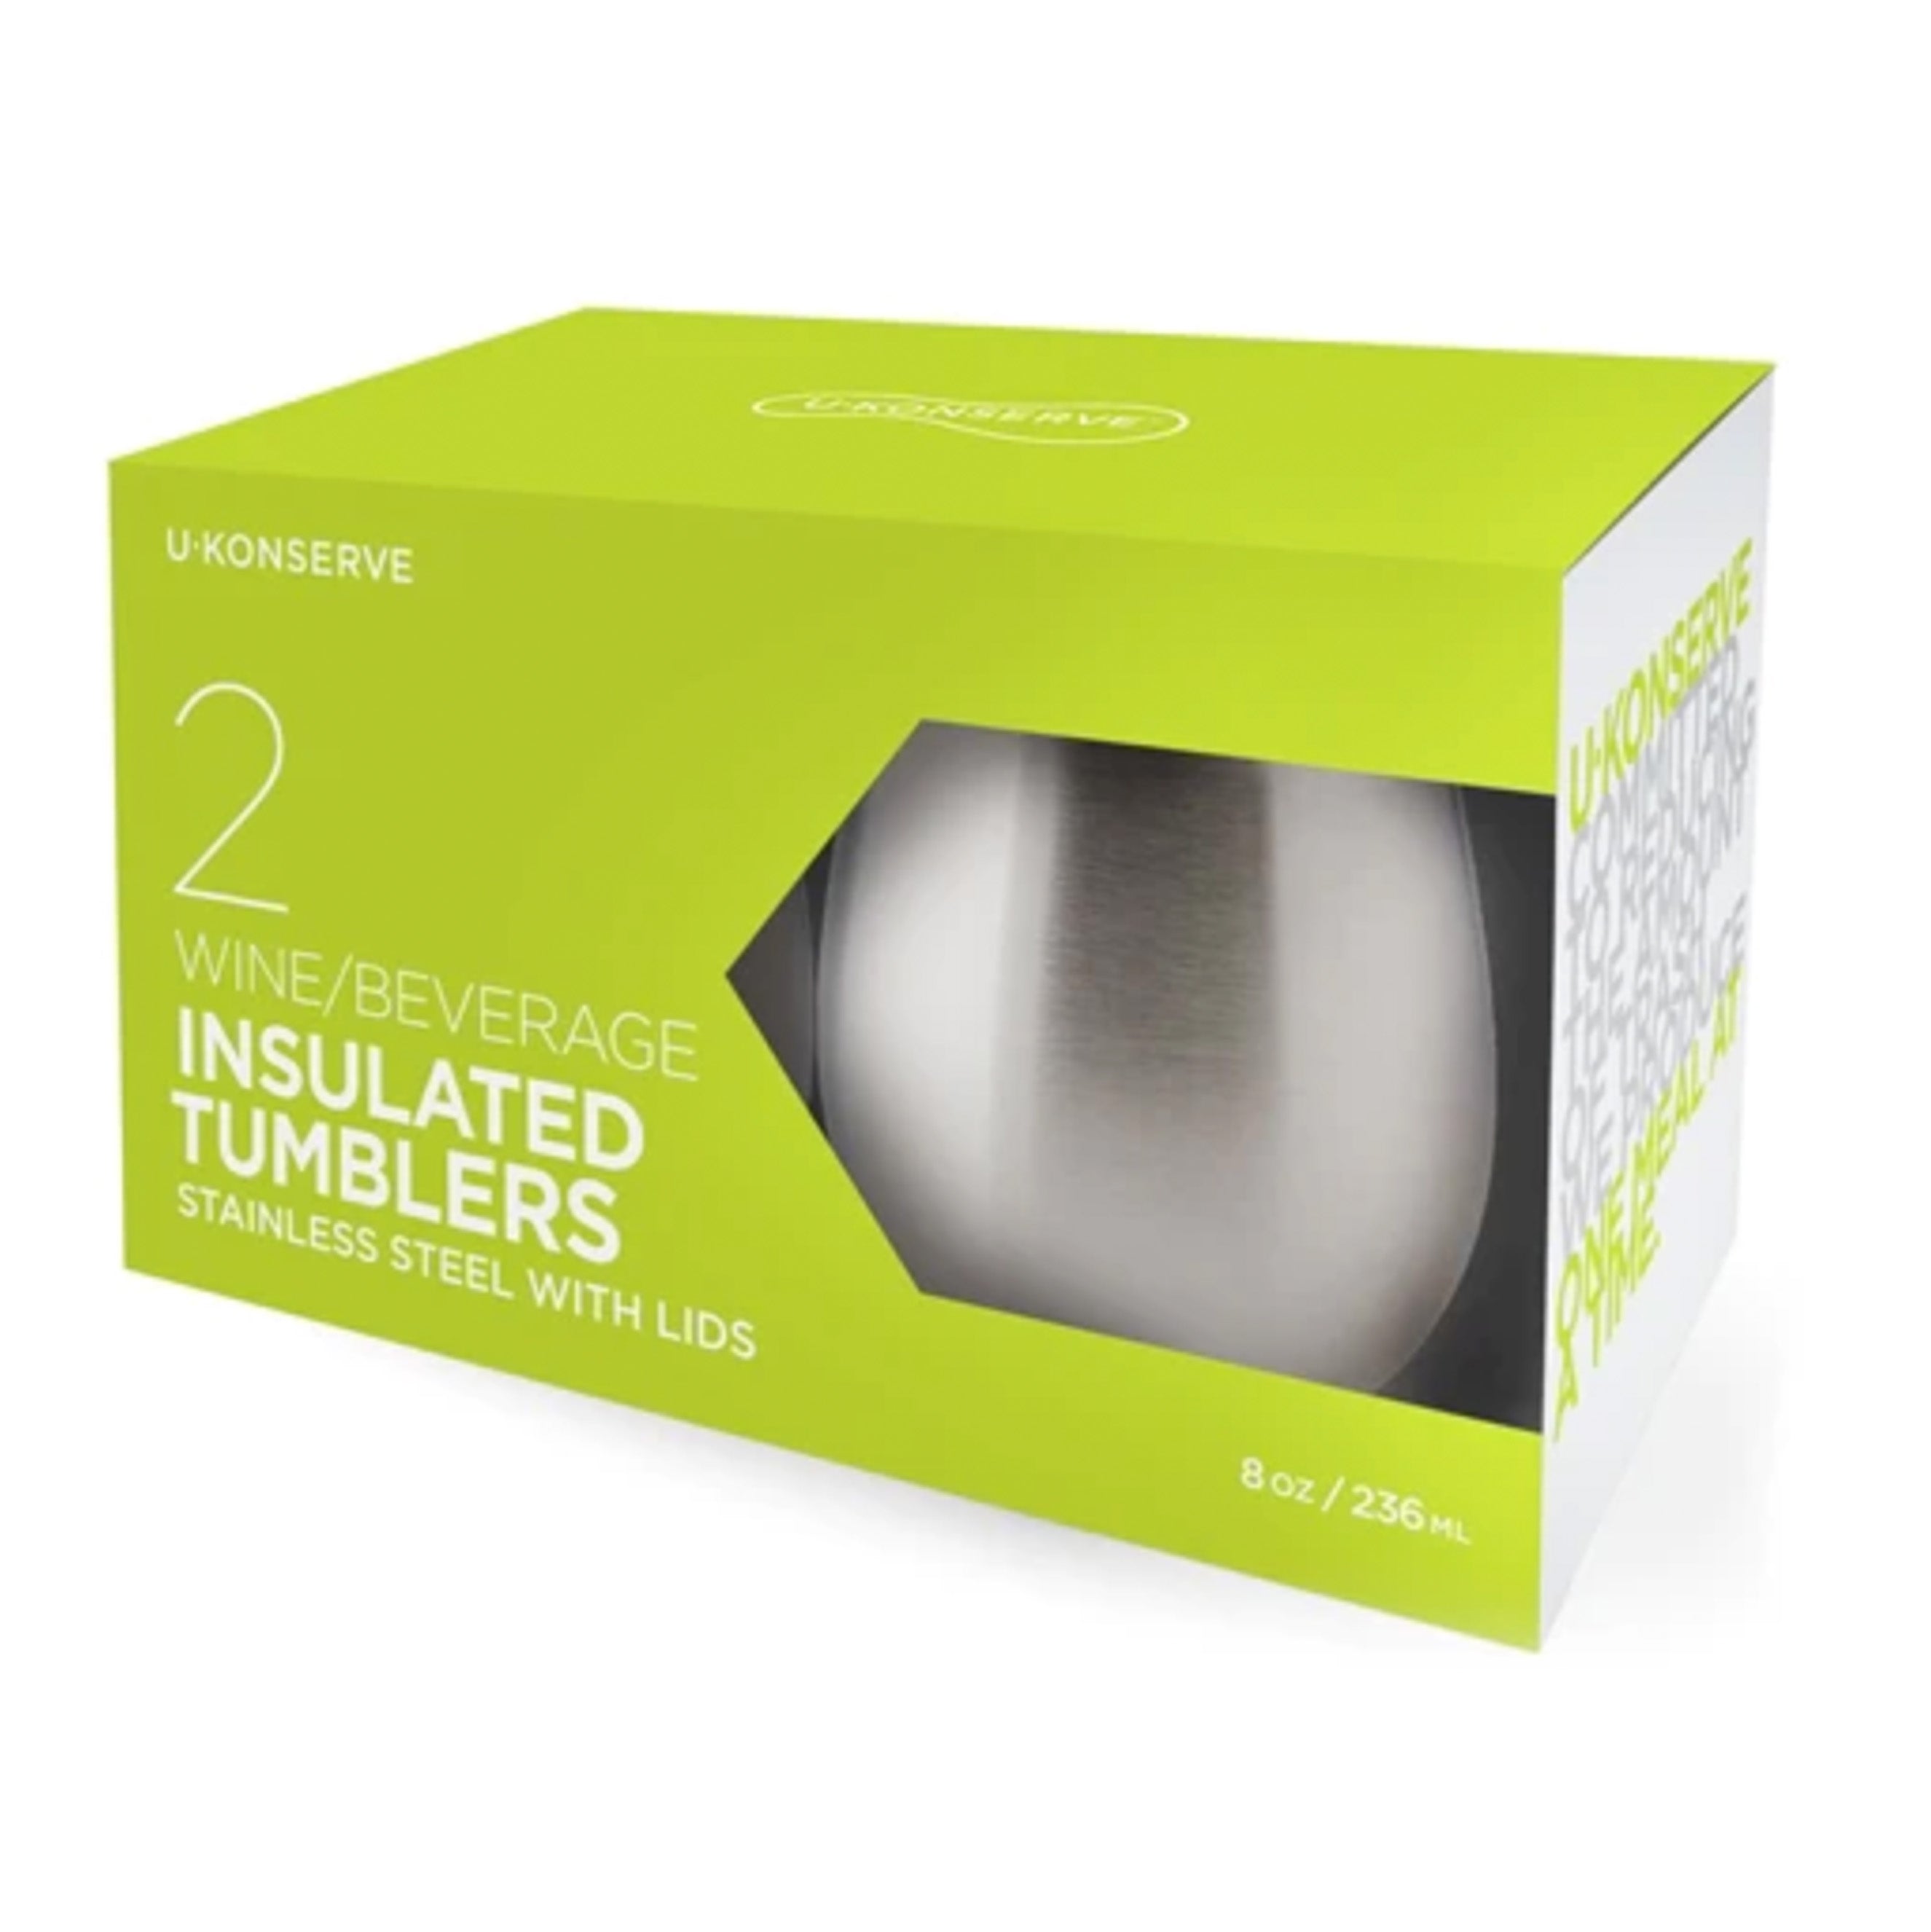 Insulated Tumbler 8oz, Set of 2 | U Konserve